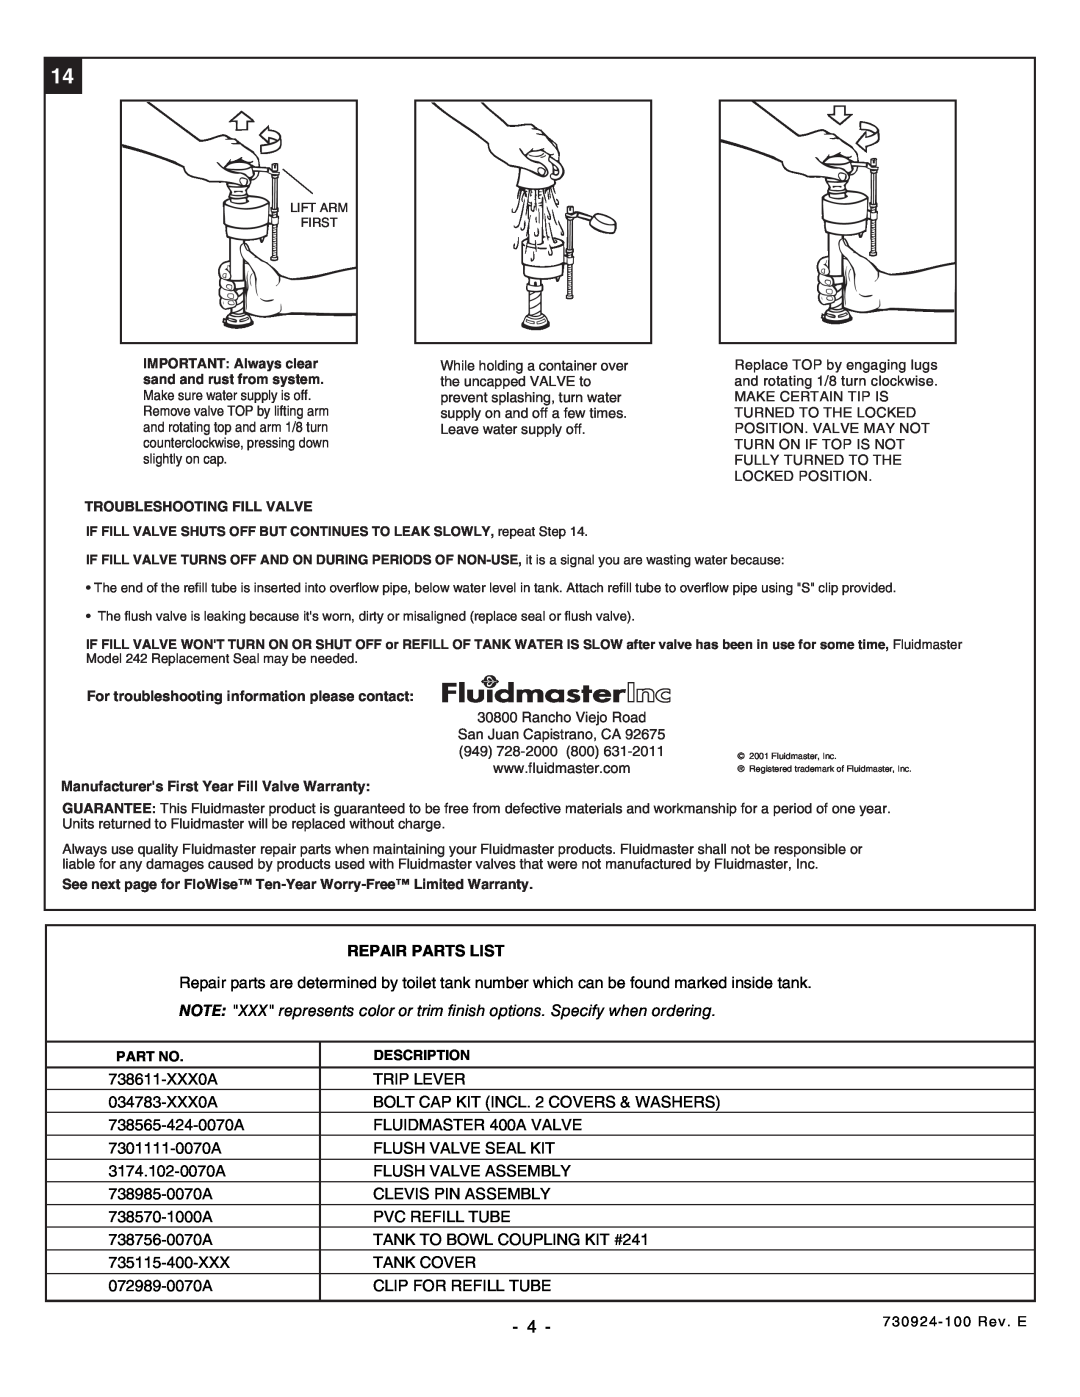 American Standard 2073 installation instructions Repair Parts List 